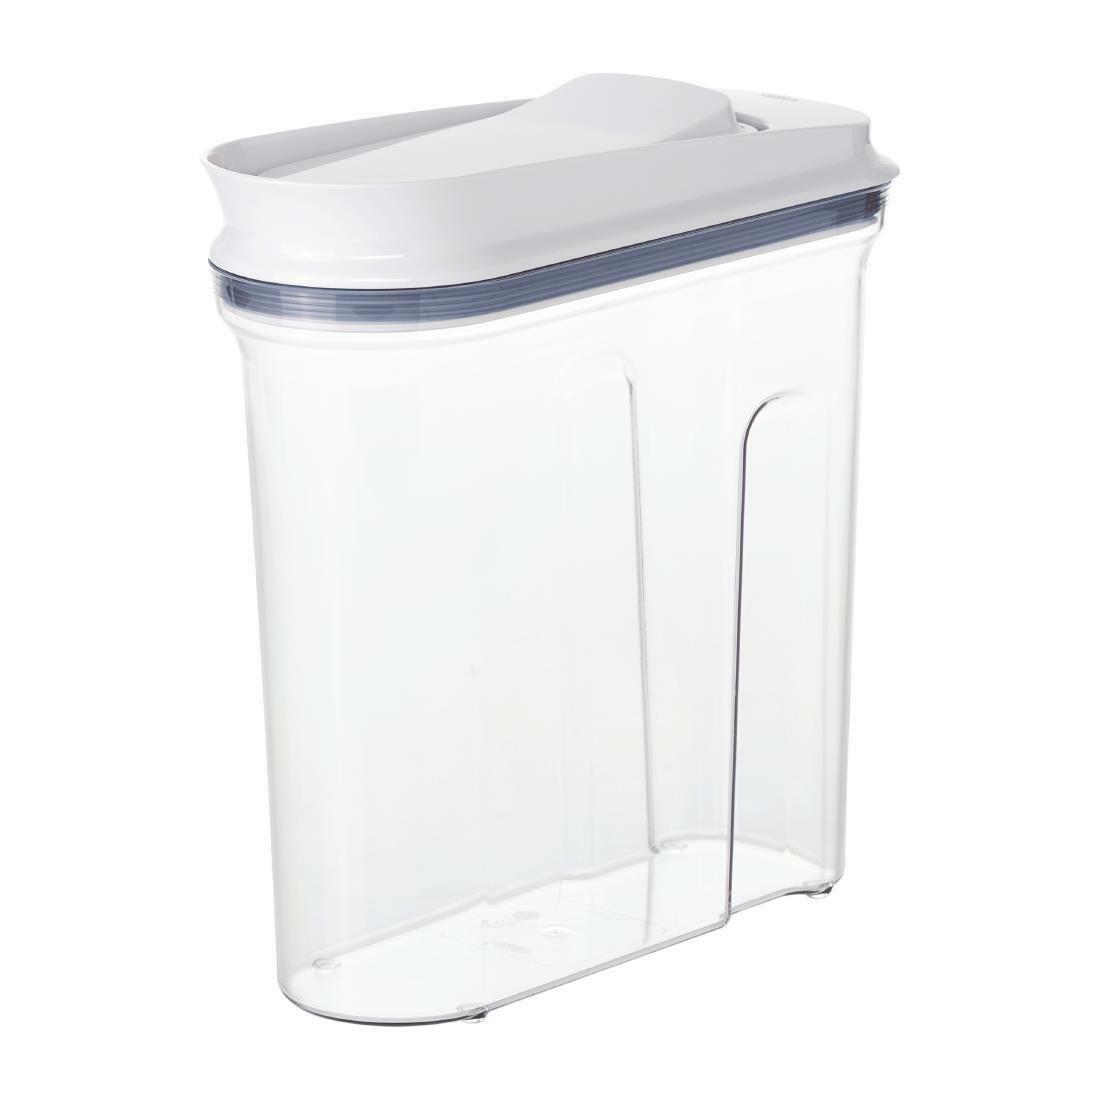 Sistema Klip It Cereal Container 145 ozs Clear / Aqua 17.75 Cups